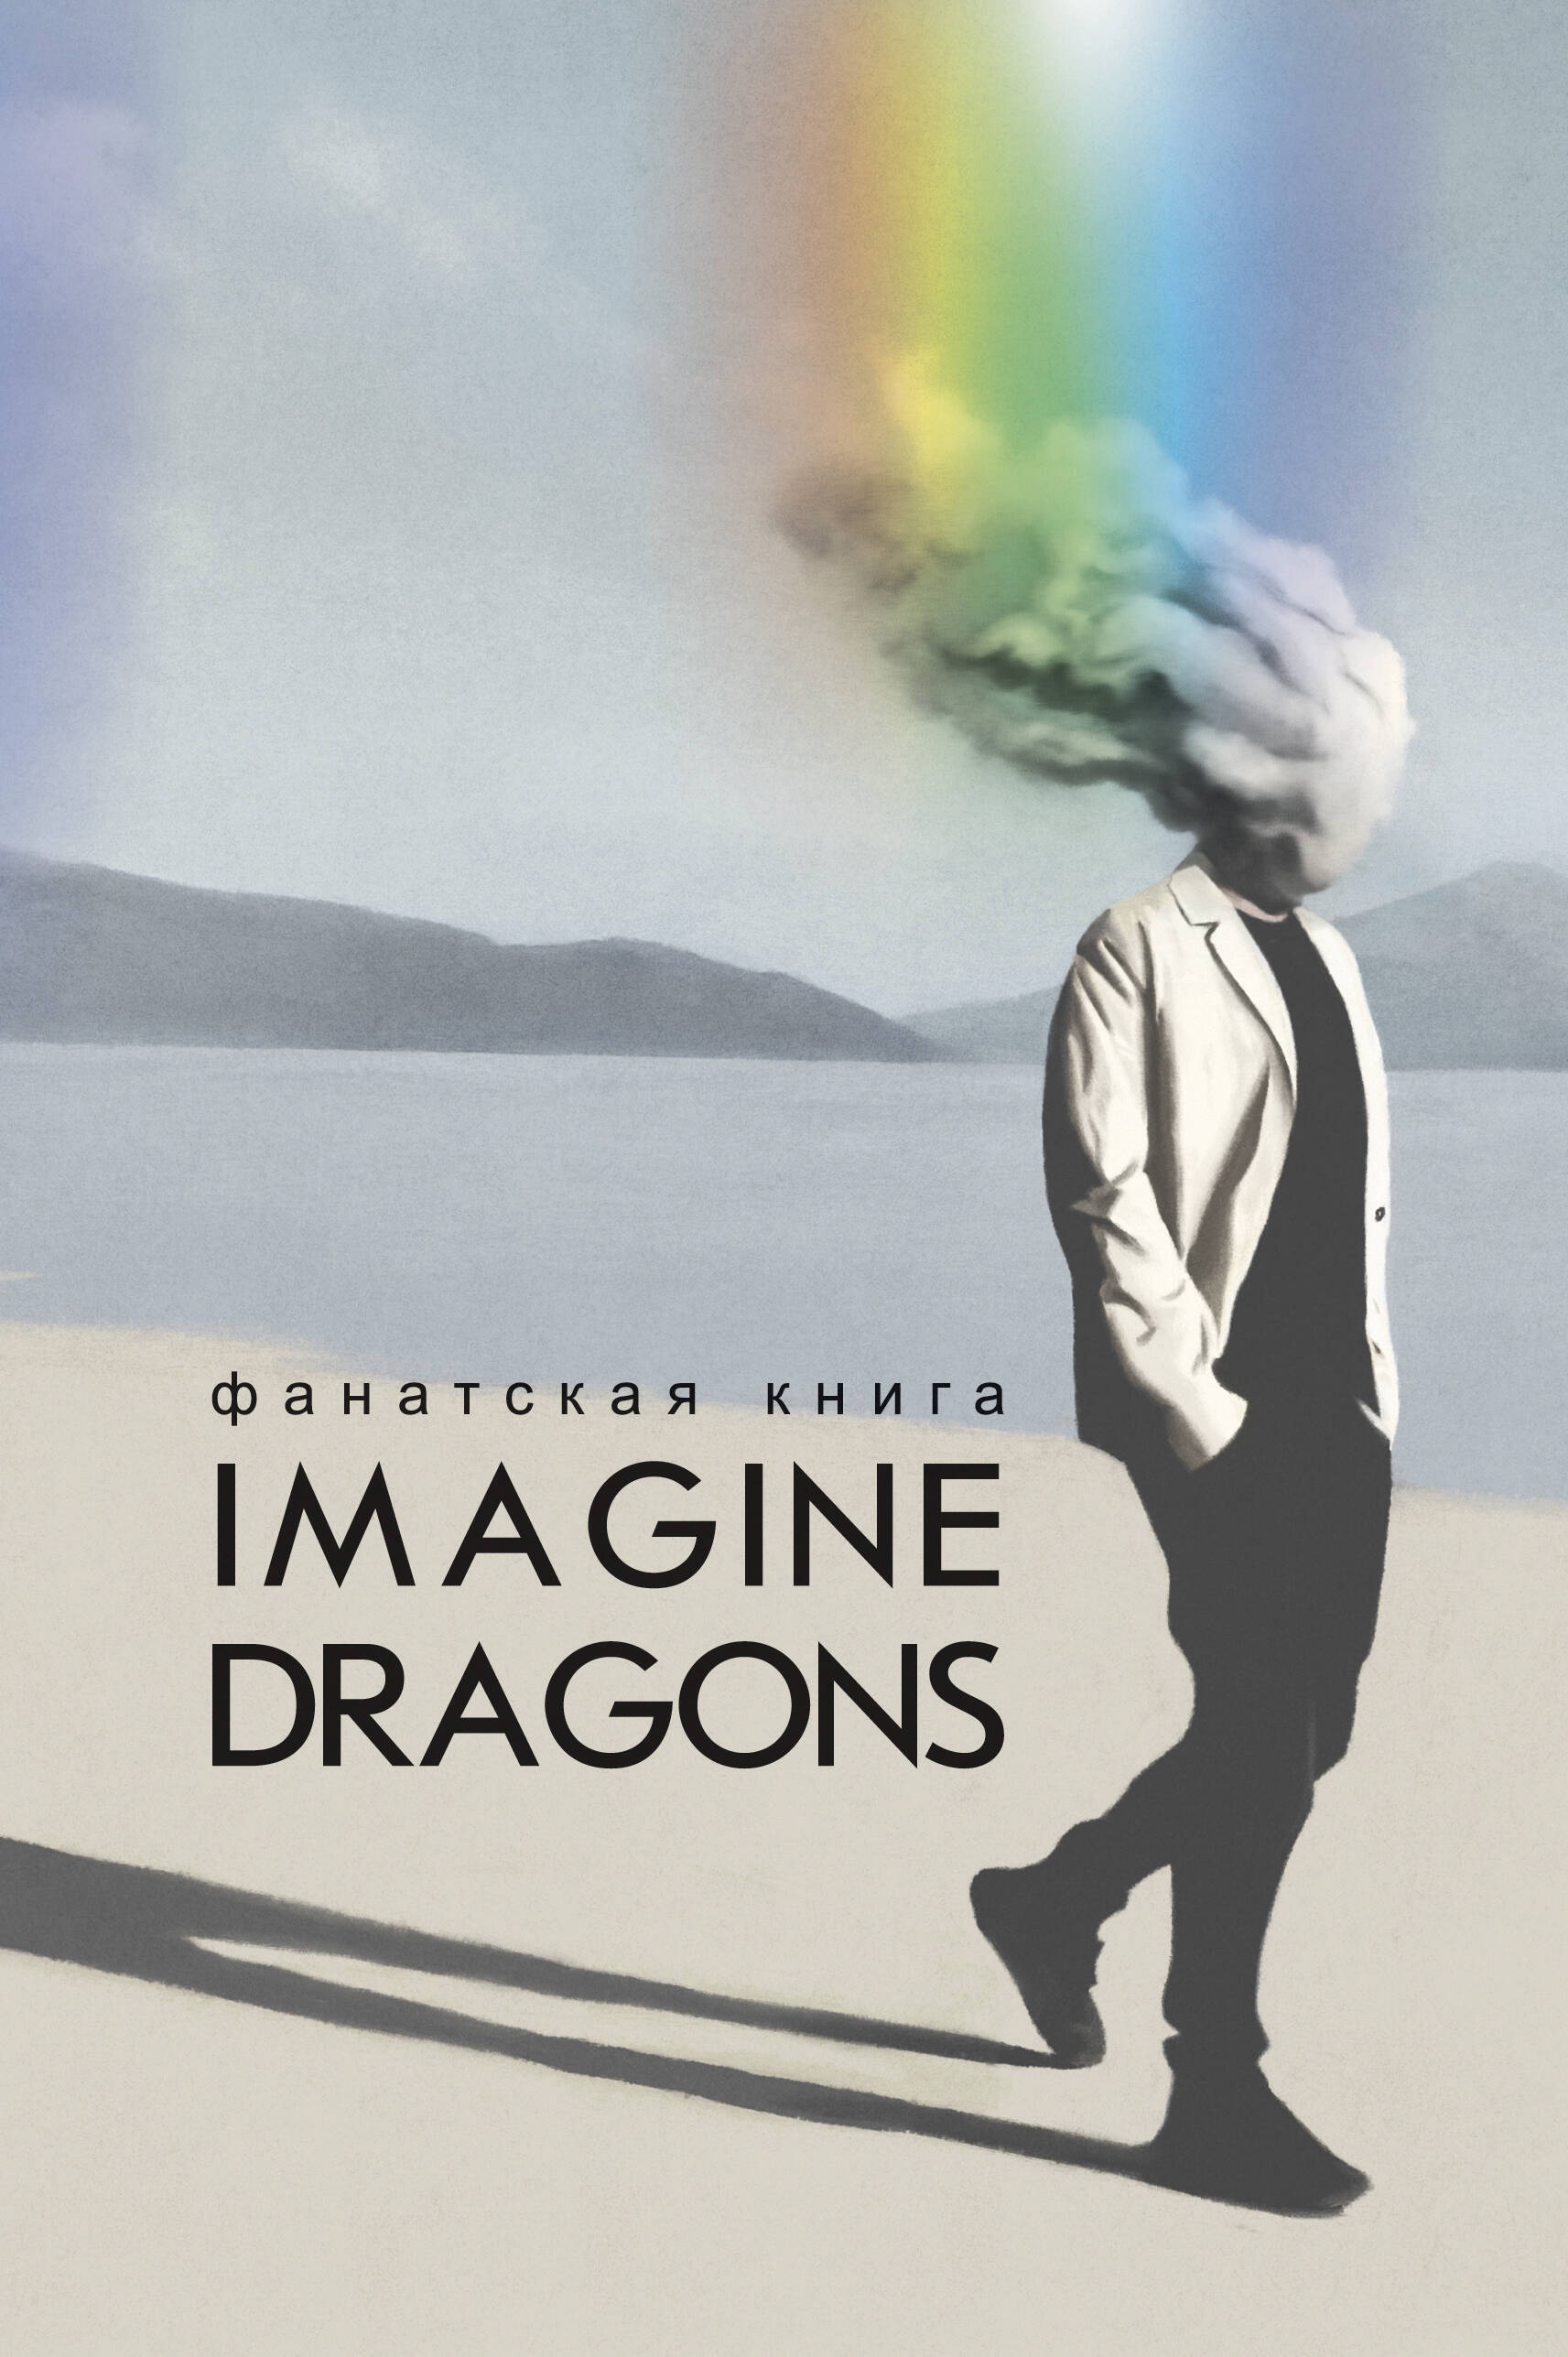 Аксенова А. Фанатская книга Imagine Dragons компакт диск eu imagine dragons mercury act 1 special edition